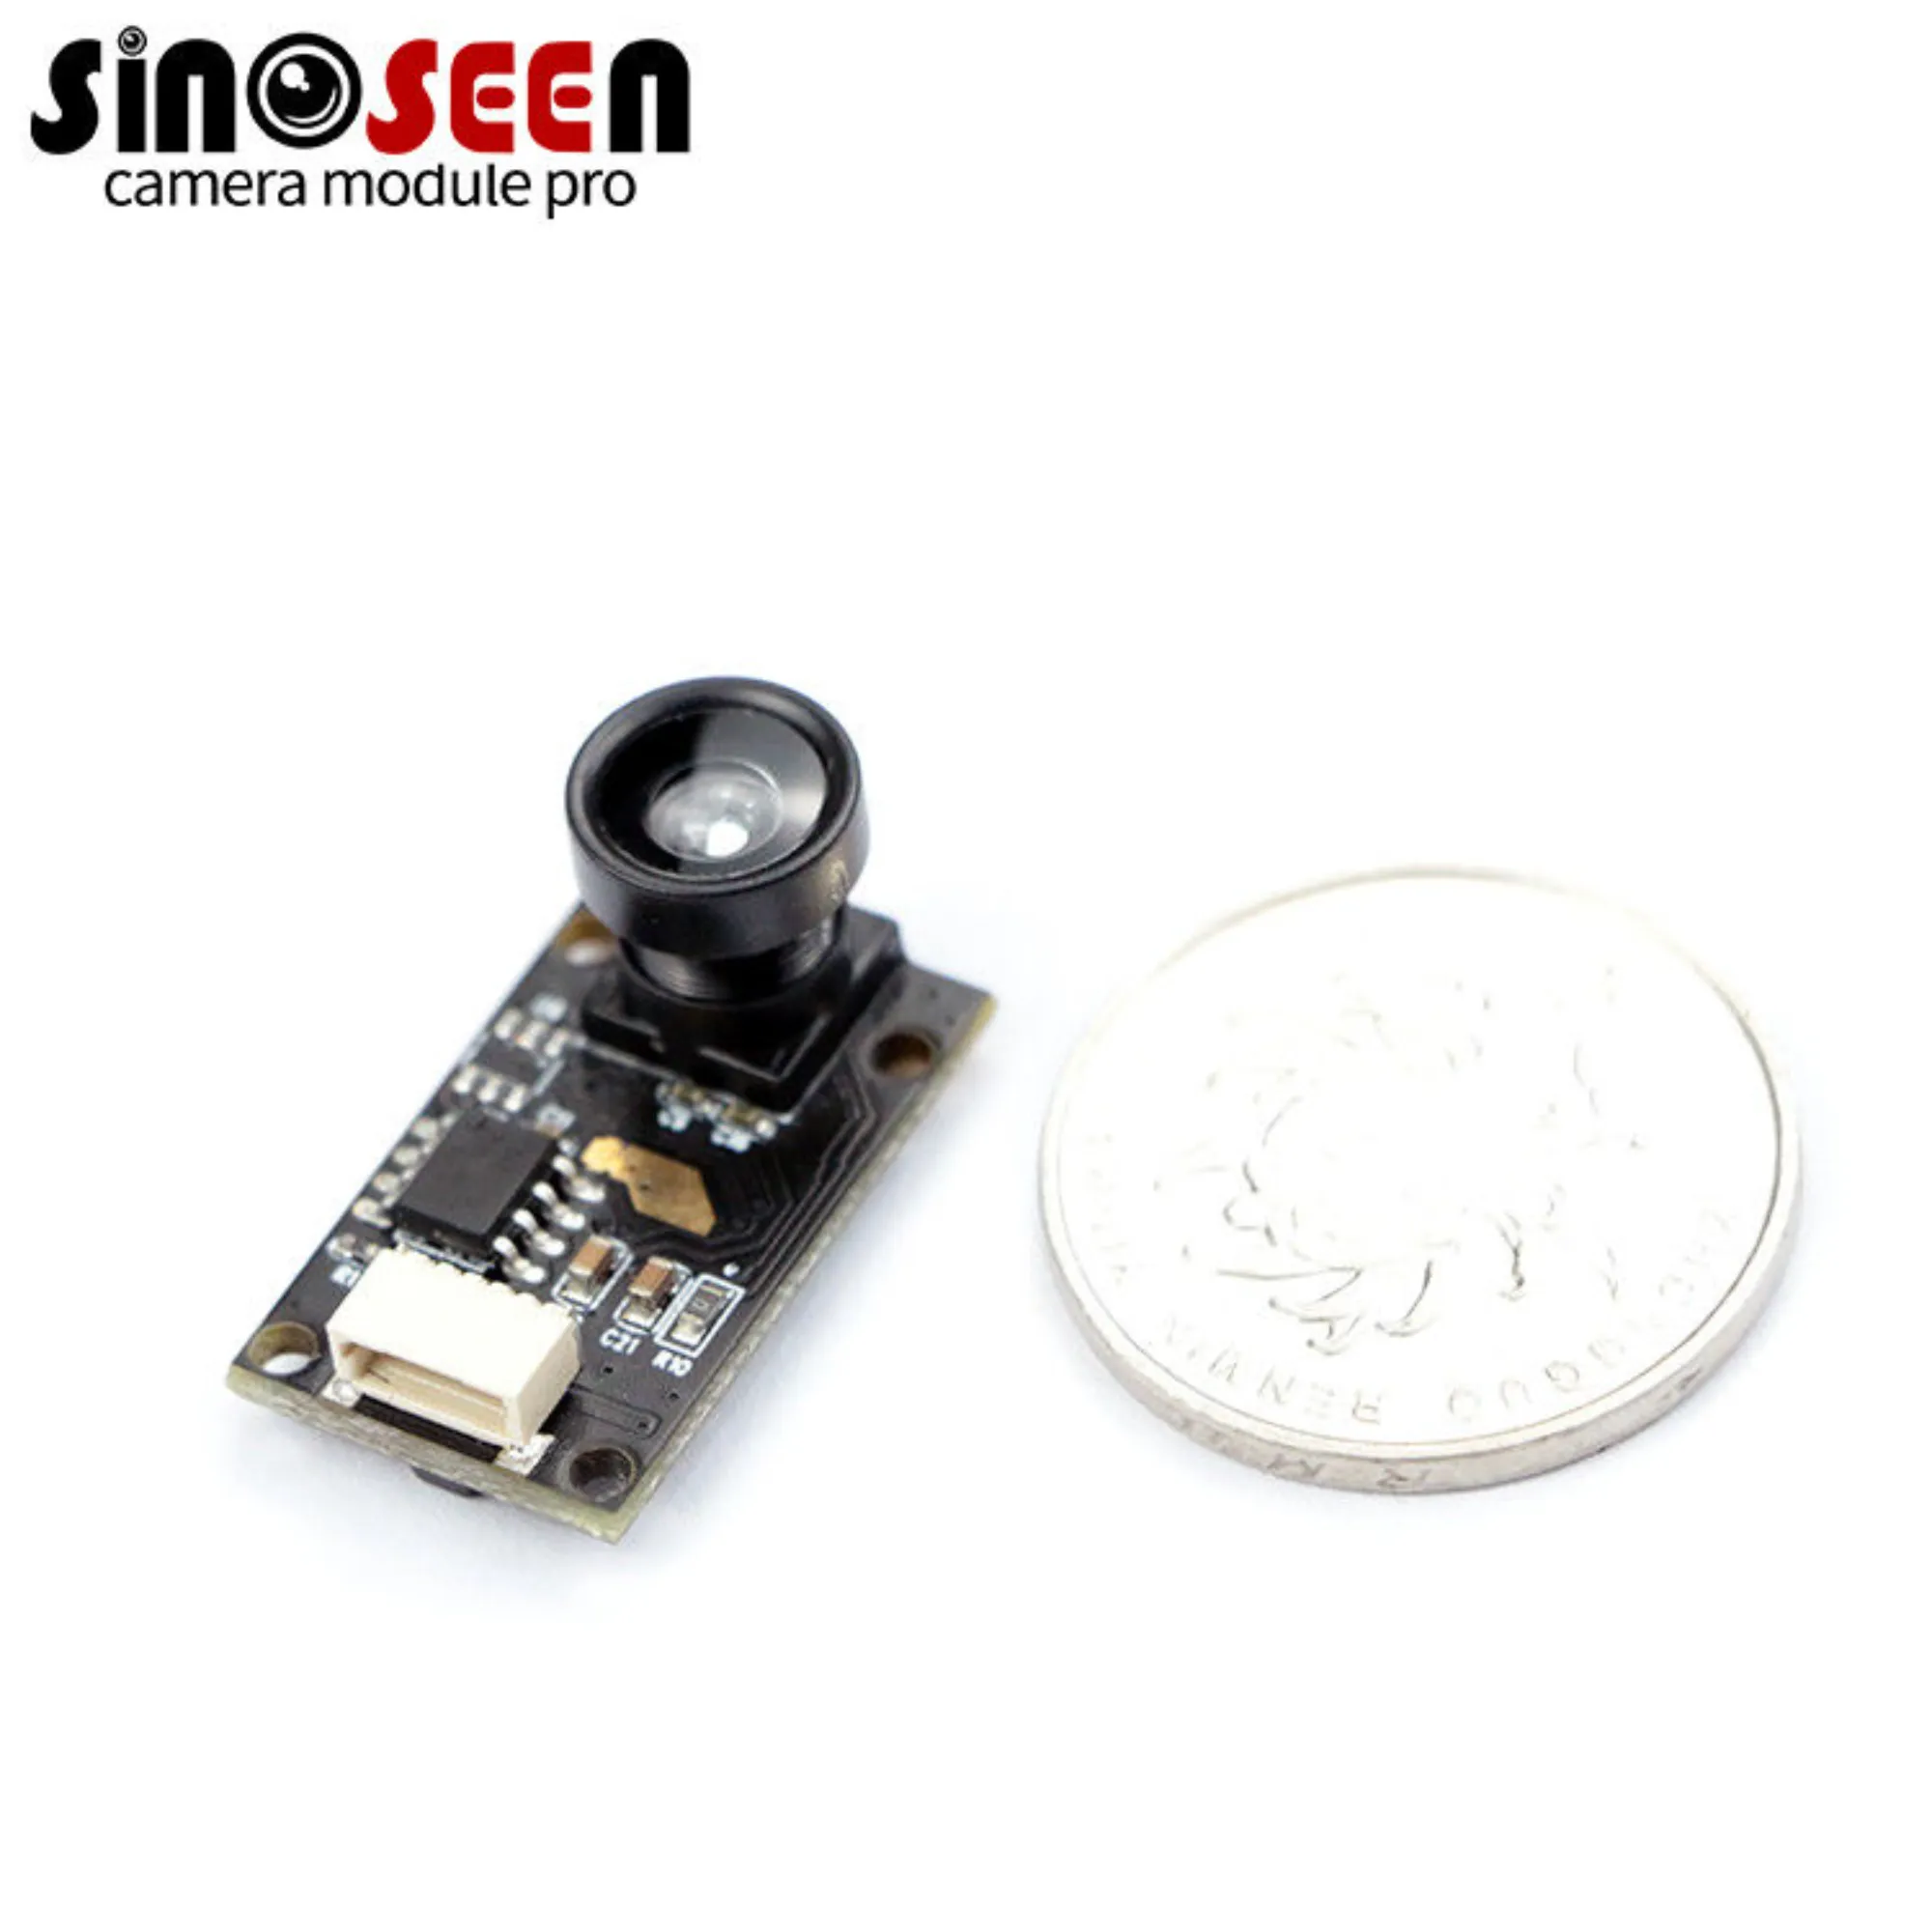 OEM Camera Modules Monochrome Super Tiny 120FPS 0.3MP With GC0308 Sensor